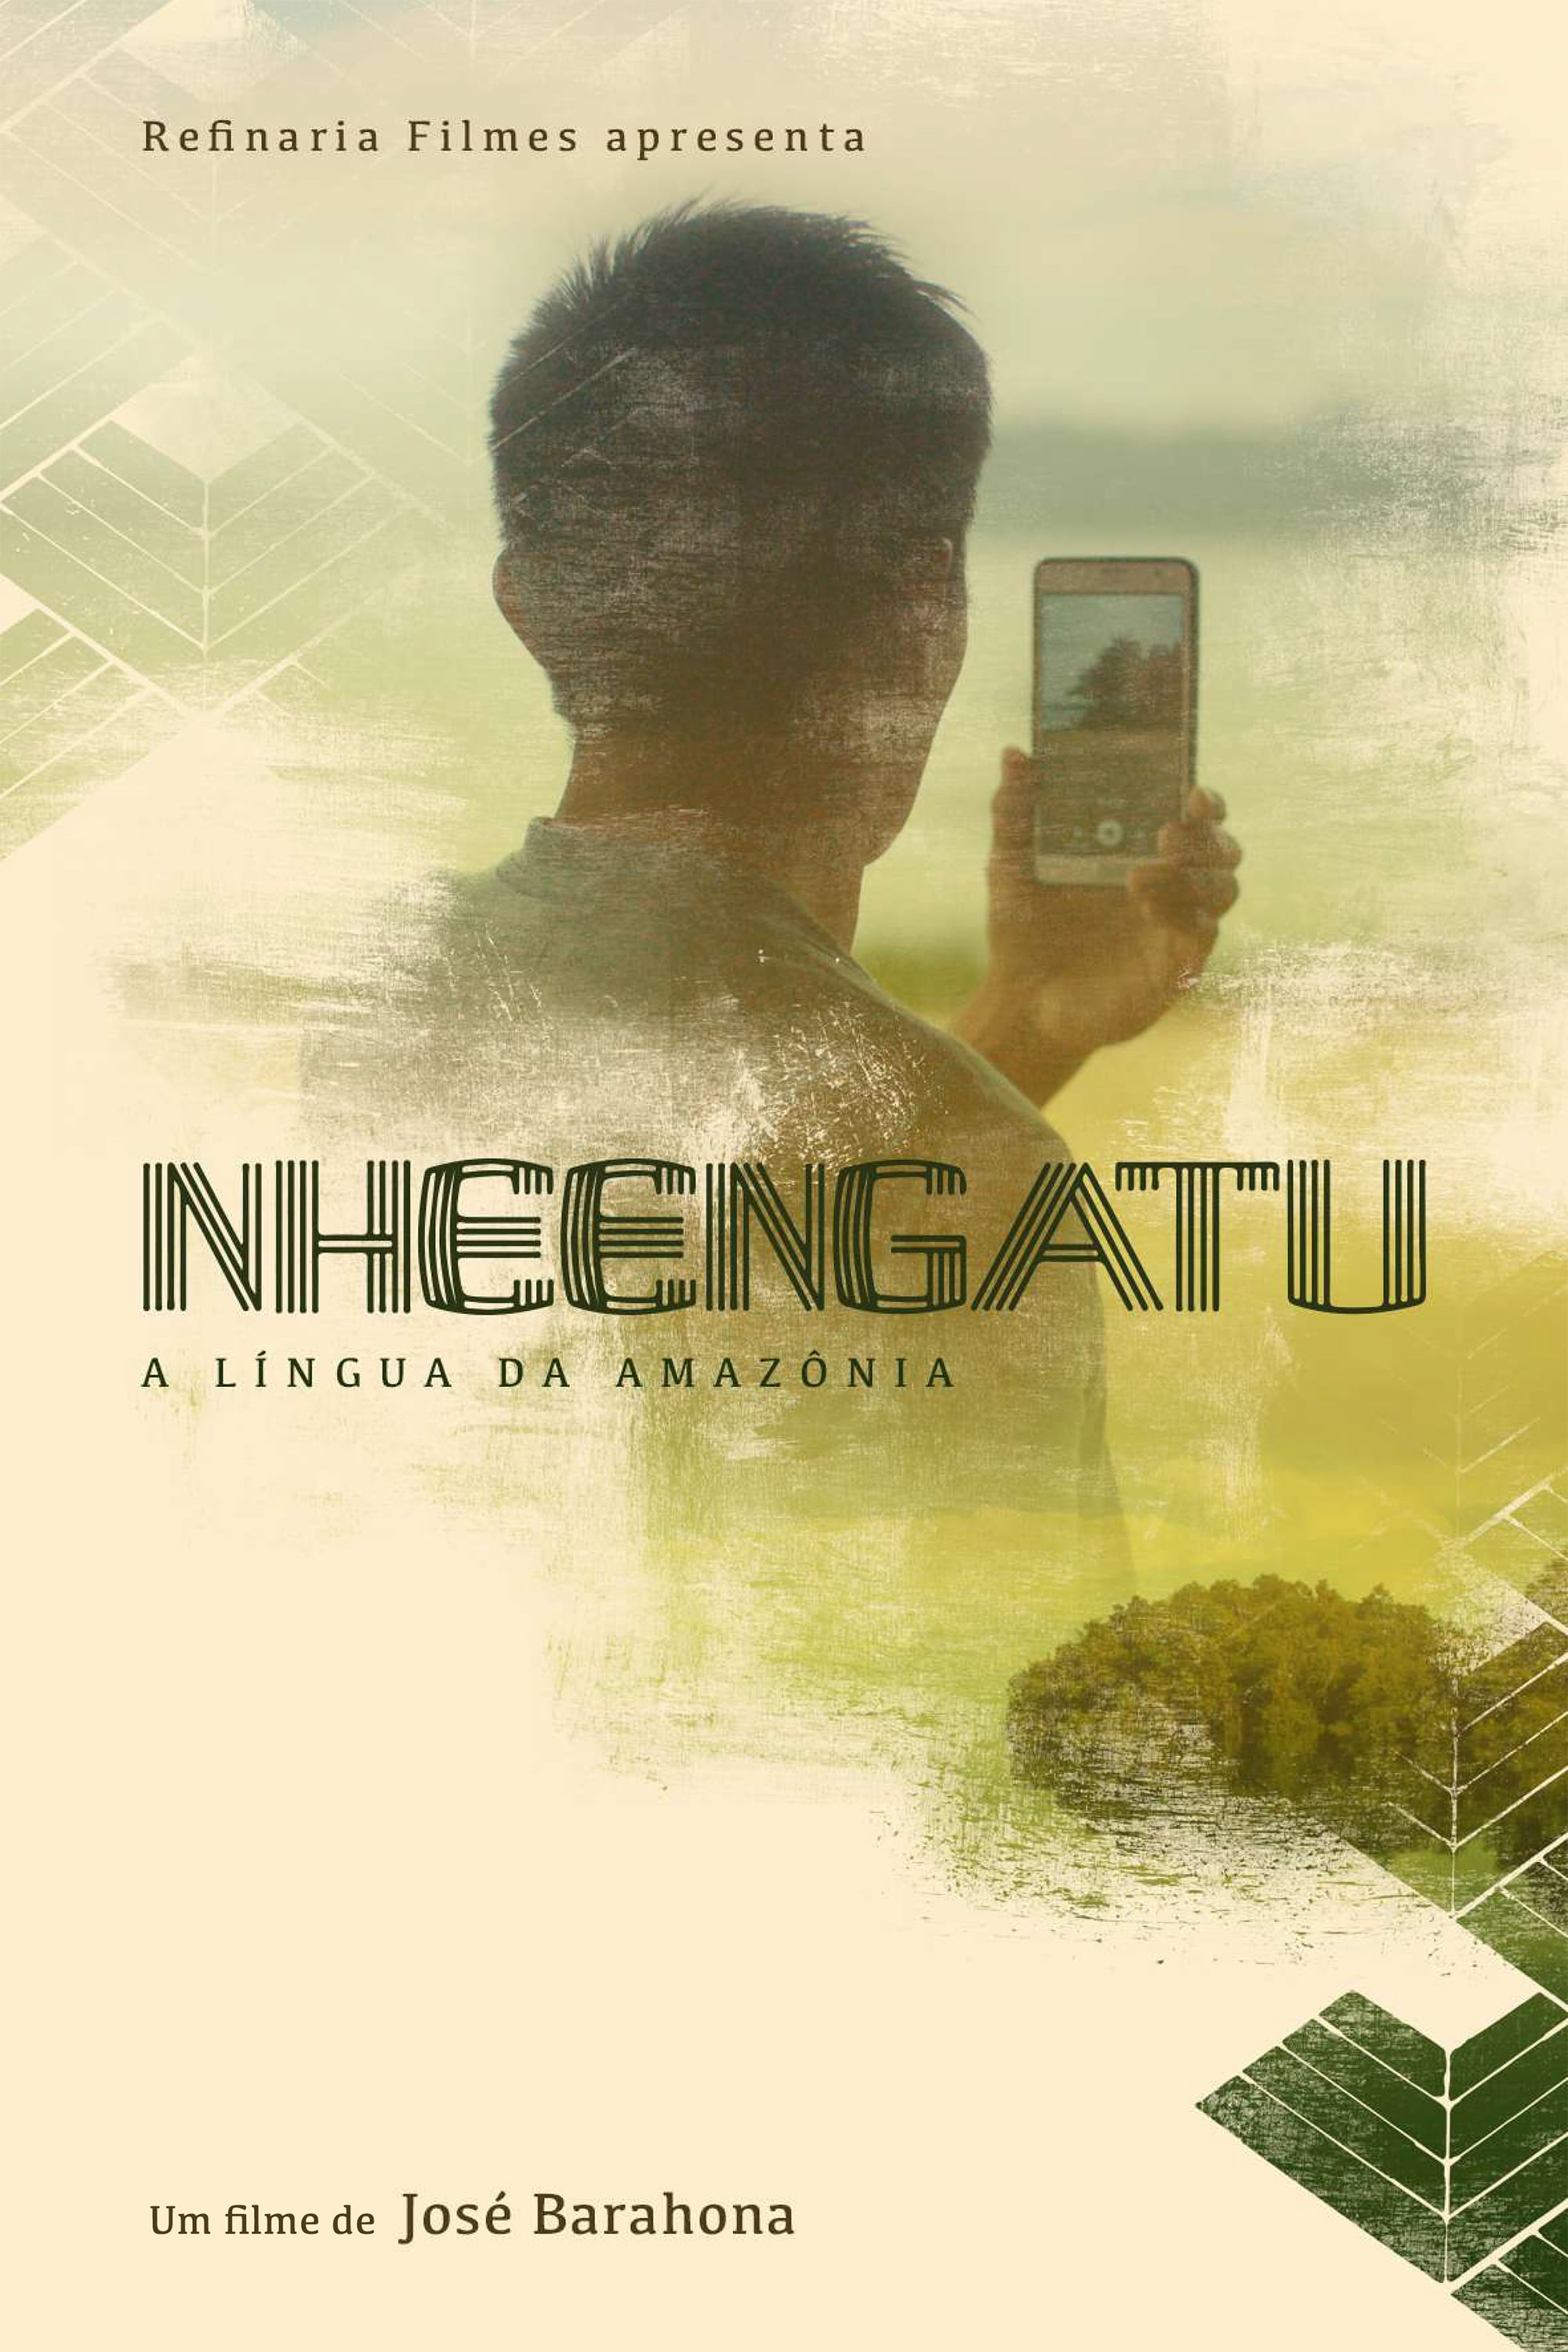 Nheengatu – The Language of the Amazon